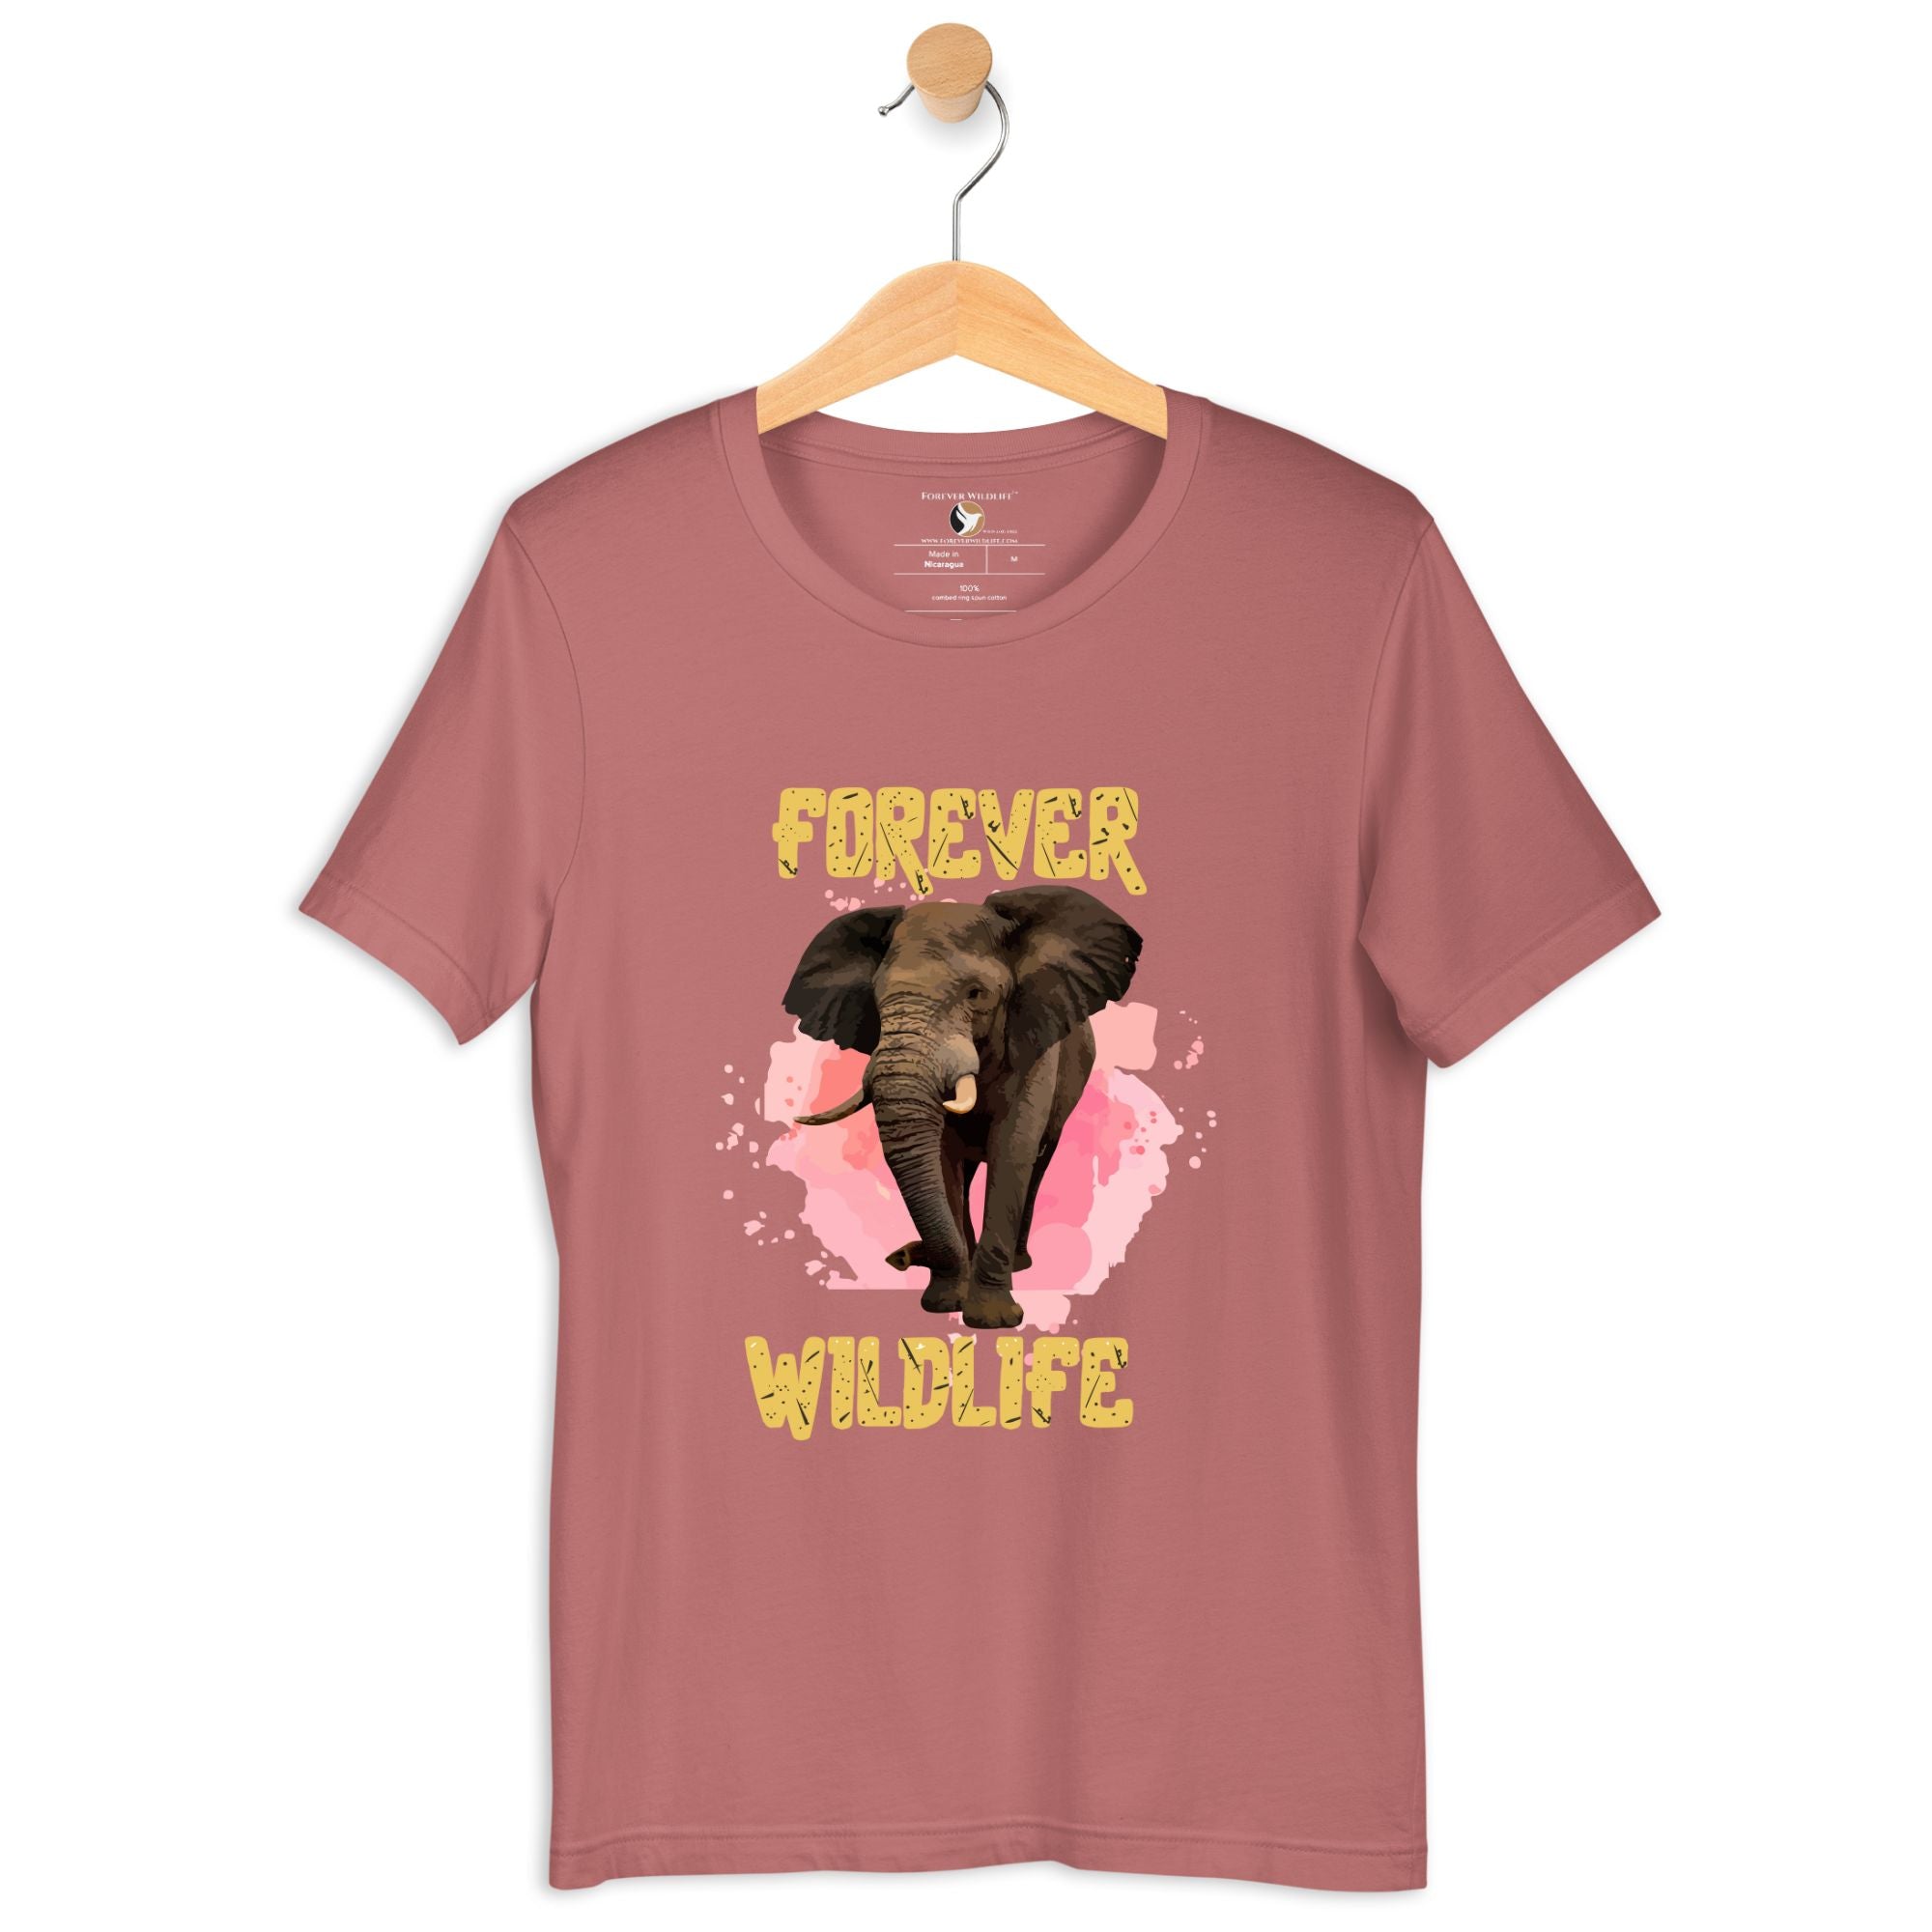 Elephant T-Shirt in Mauve – Premium Wildlife T-Shirt Design, Wildlife Clothing & Apparel from Forever Wildlife